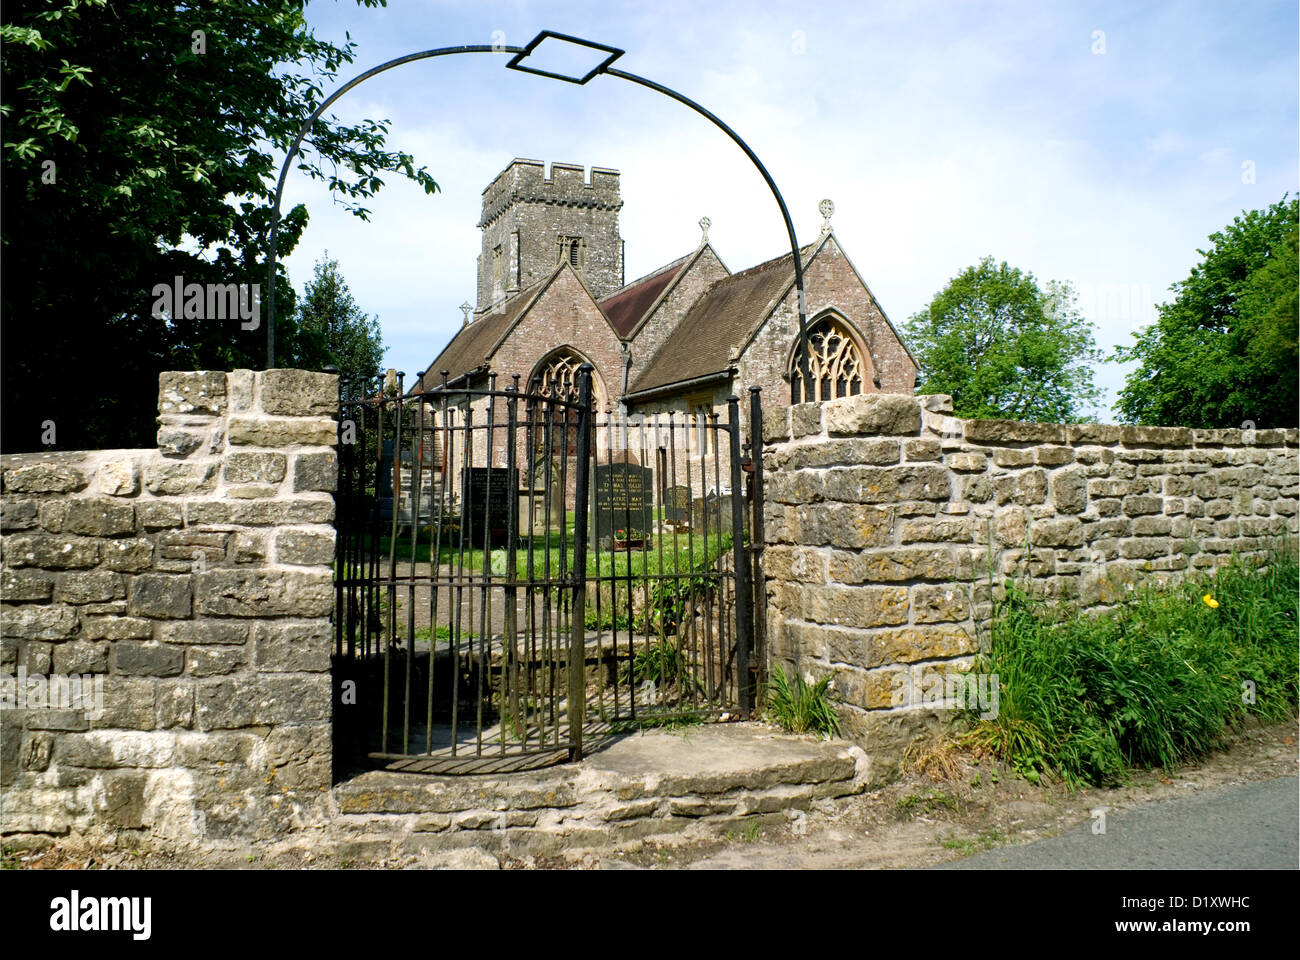 St Hilarys Church, St Hilary, Vale of Glamorgan, South Wales, UK. Stock Photo